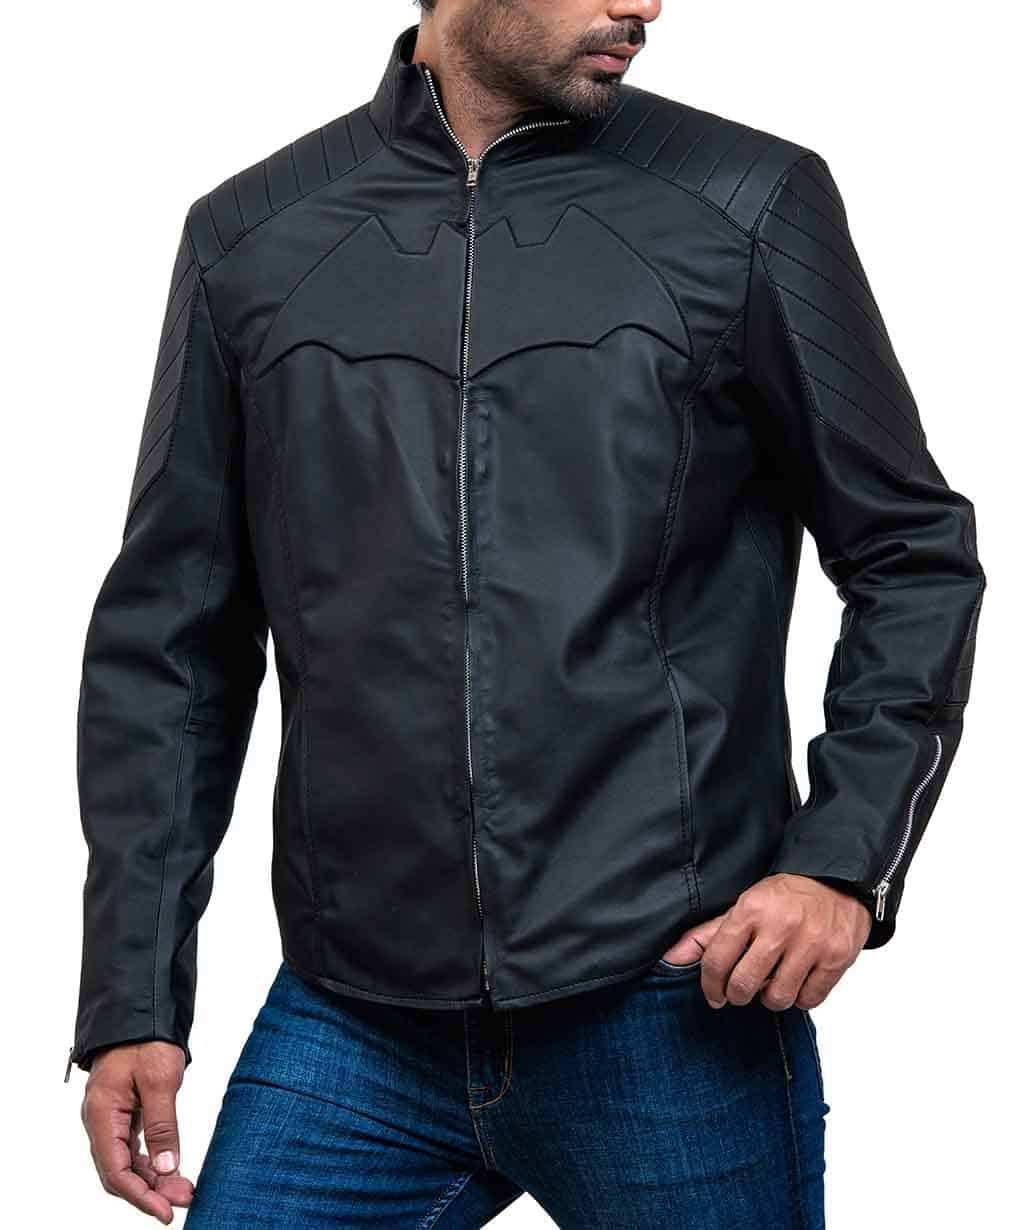 batman-the-dark-knight-rises-black-leather-jacket-sale